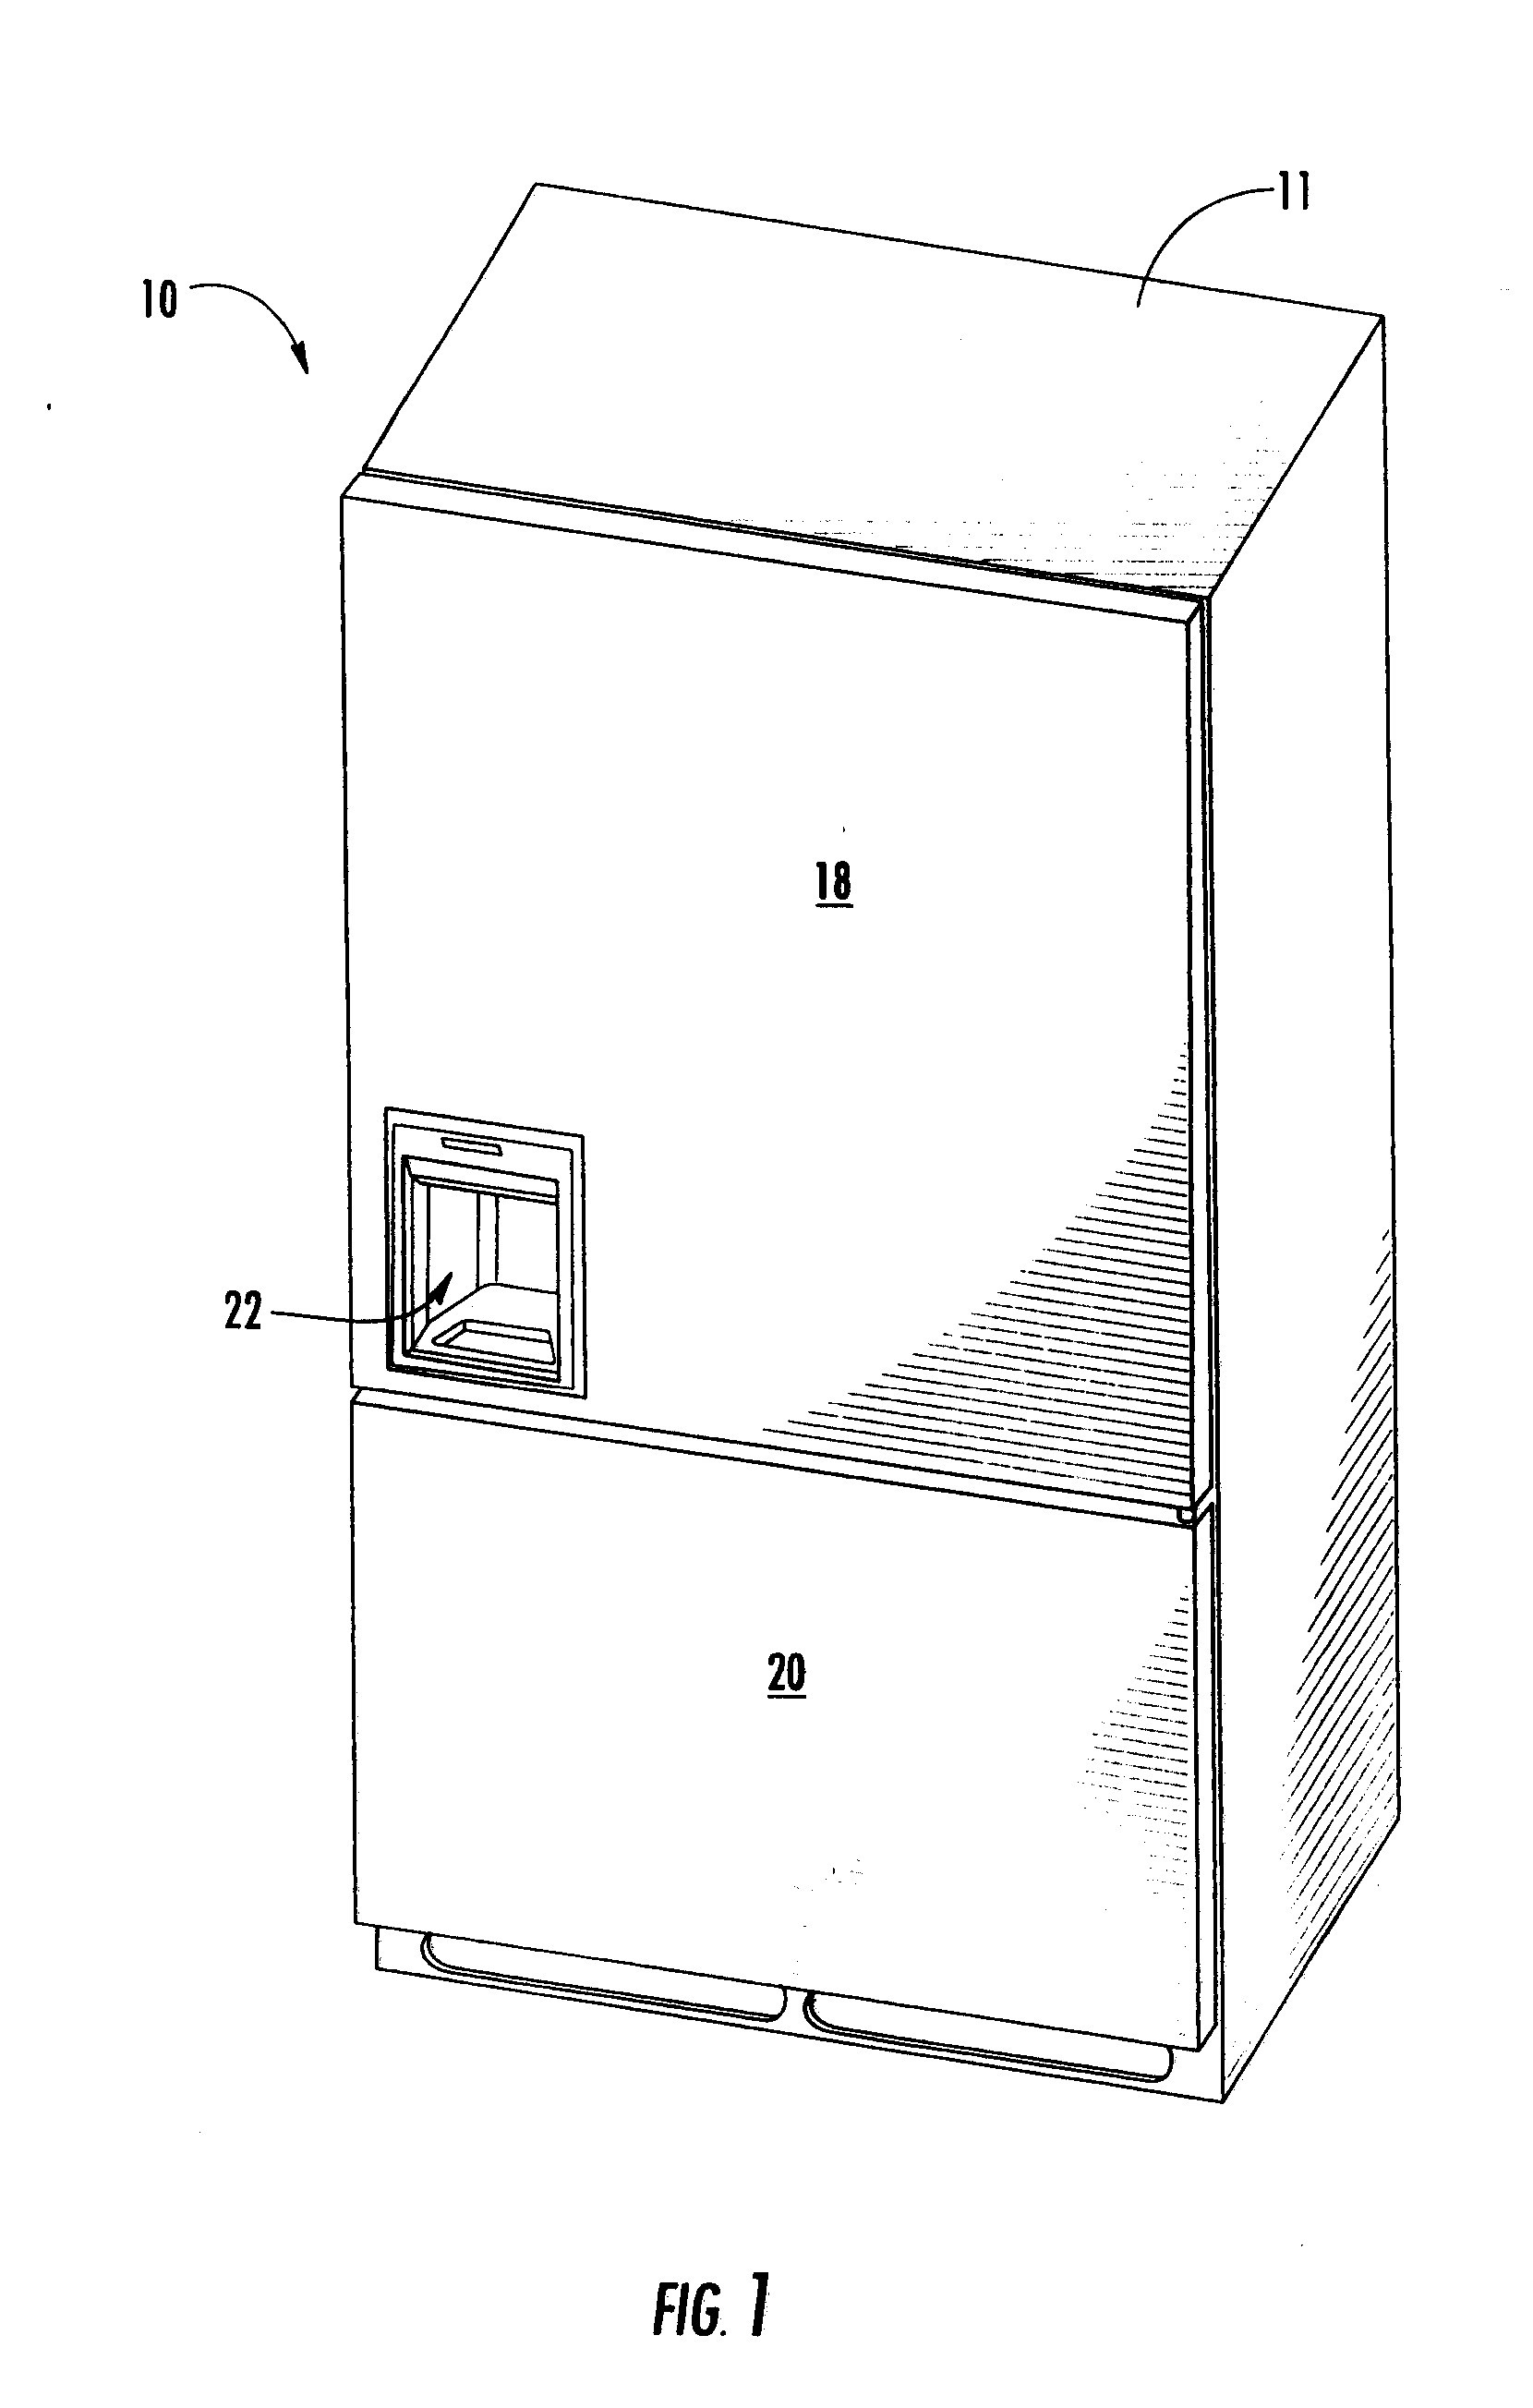 Ice maker and dispenser for a bottom mount refrigerator